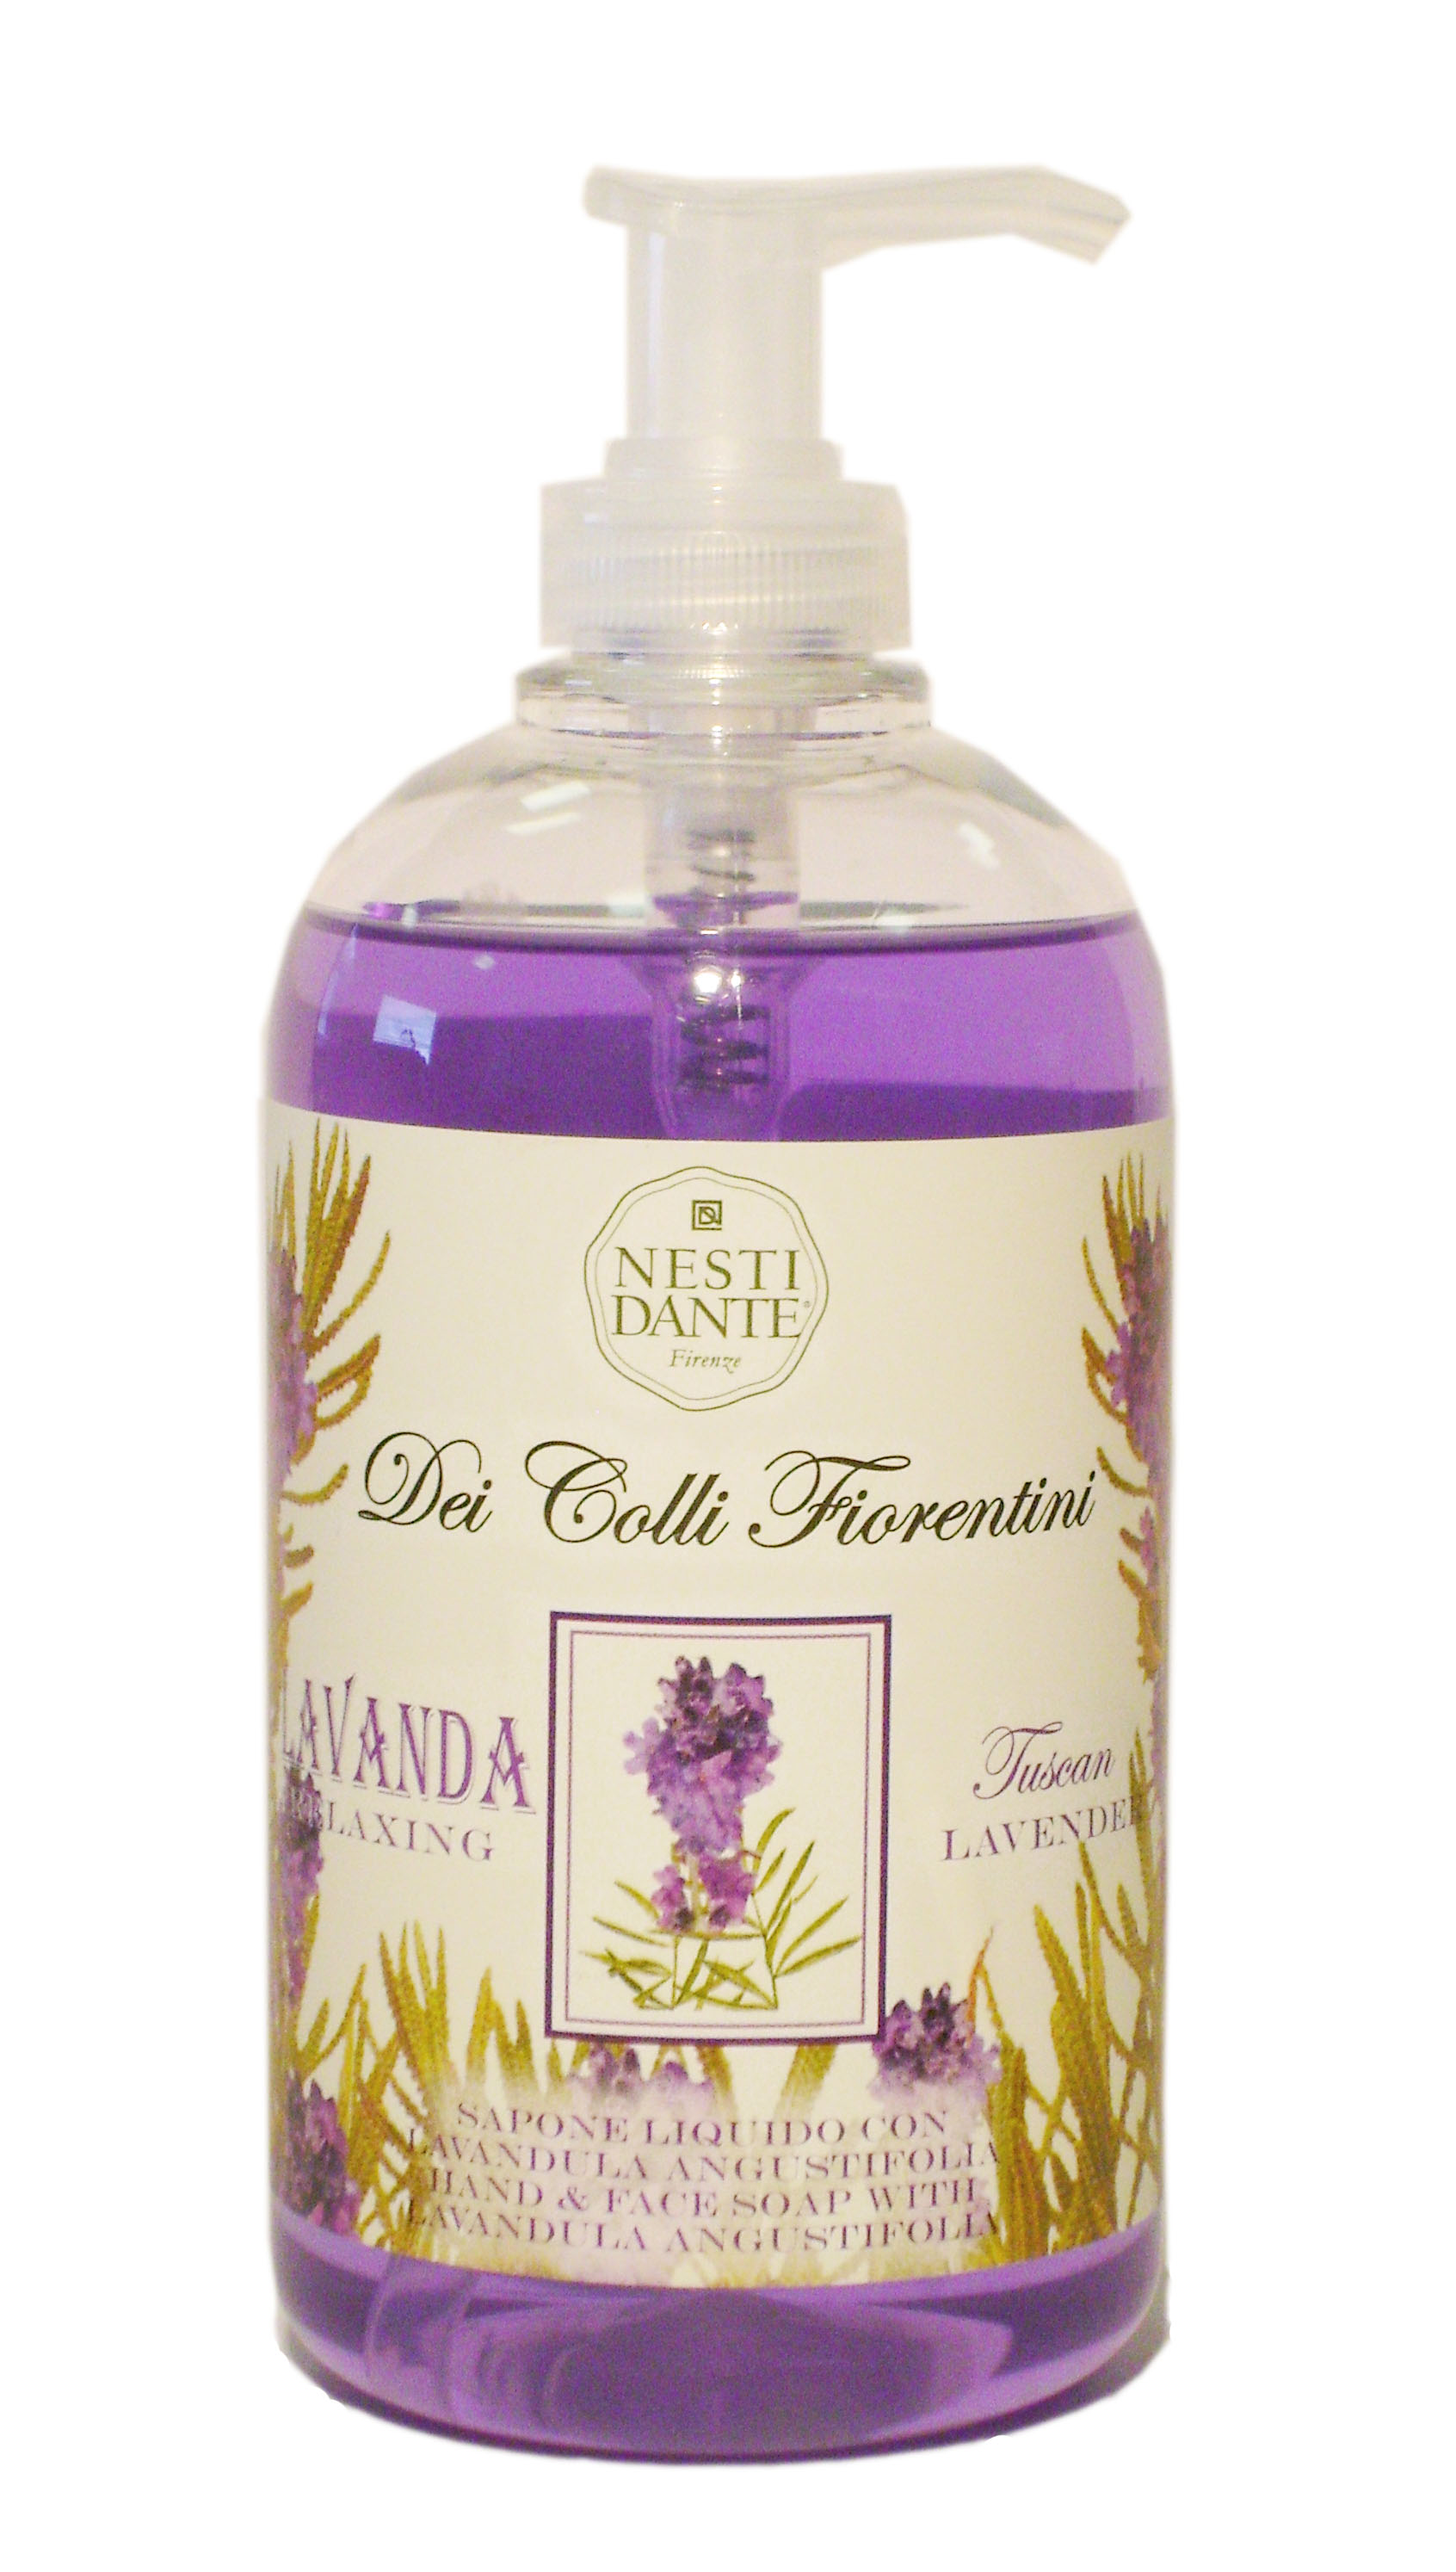 Tuscan Lavendel hand & face, 500 ml